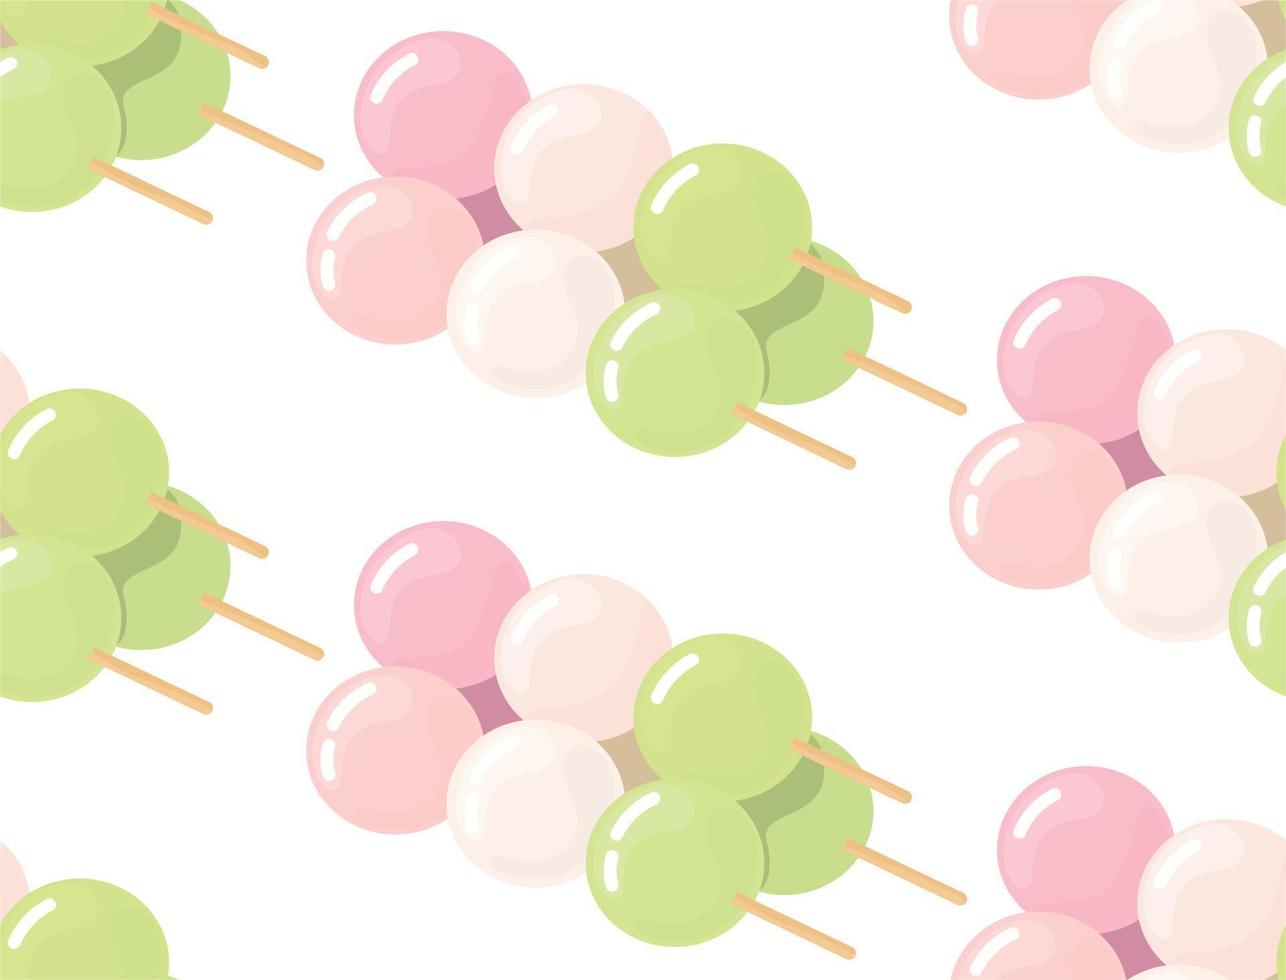 Seamless pattern background with Dango japanese sweet dumpling dessert. Pink, white, green 3 balls served on skewer. Asian food cute wallpaper, print, backdrop vector